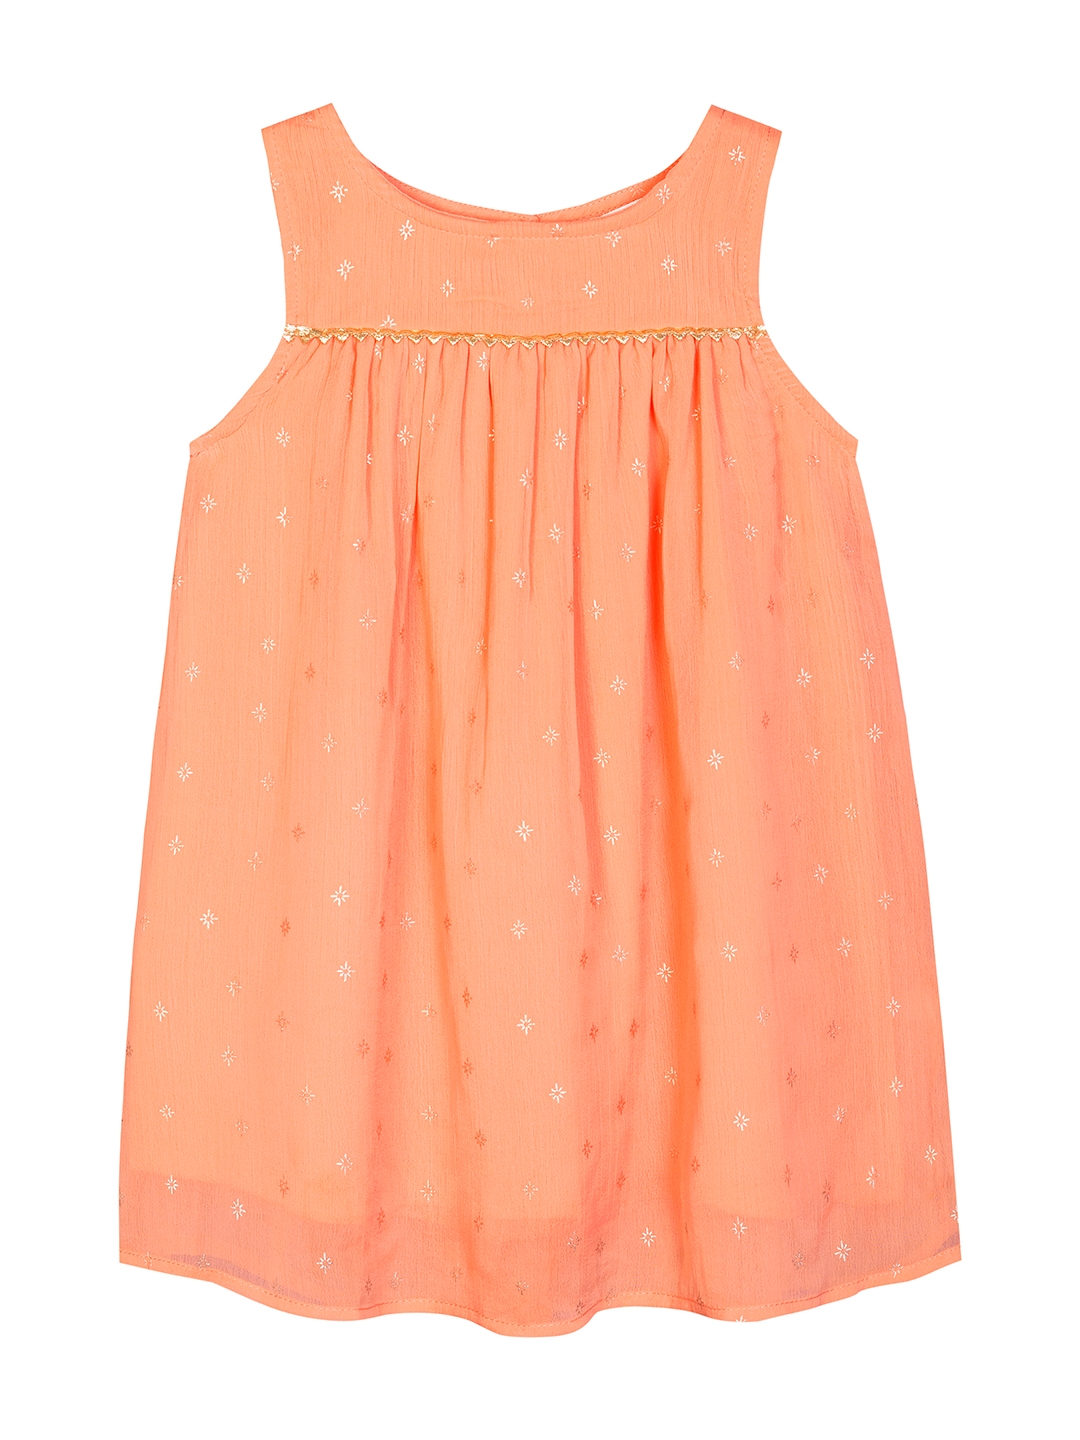 Budding Bees Girls Orange Lurex Printed A-Line Dress